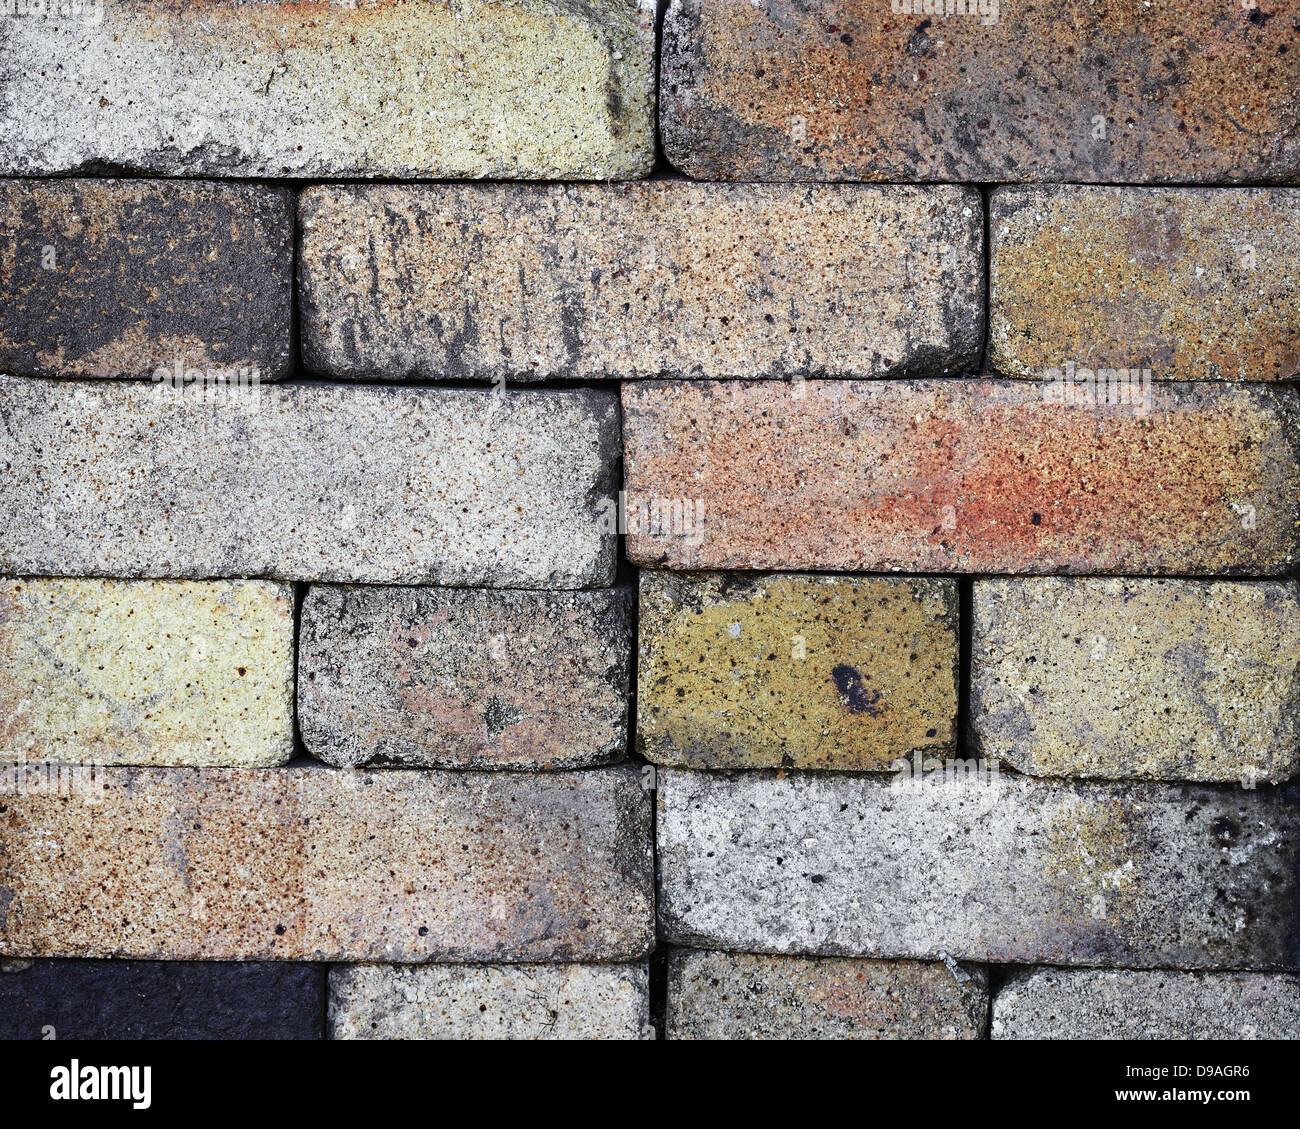 Fireproof bricks stacked like wall - background Stock Photo - Alamy